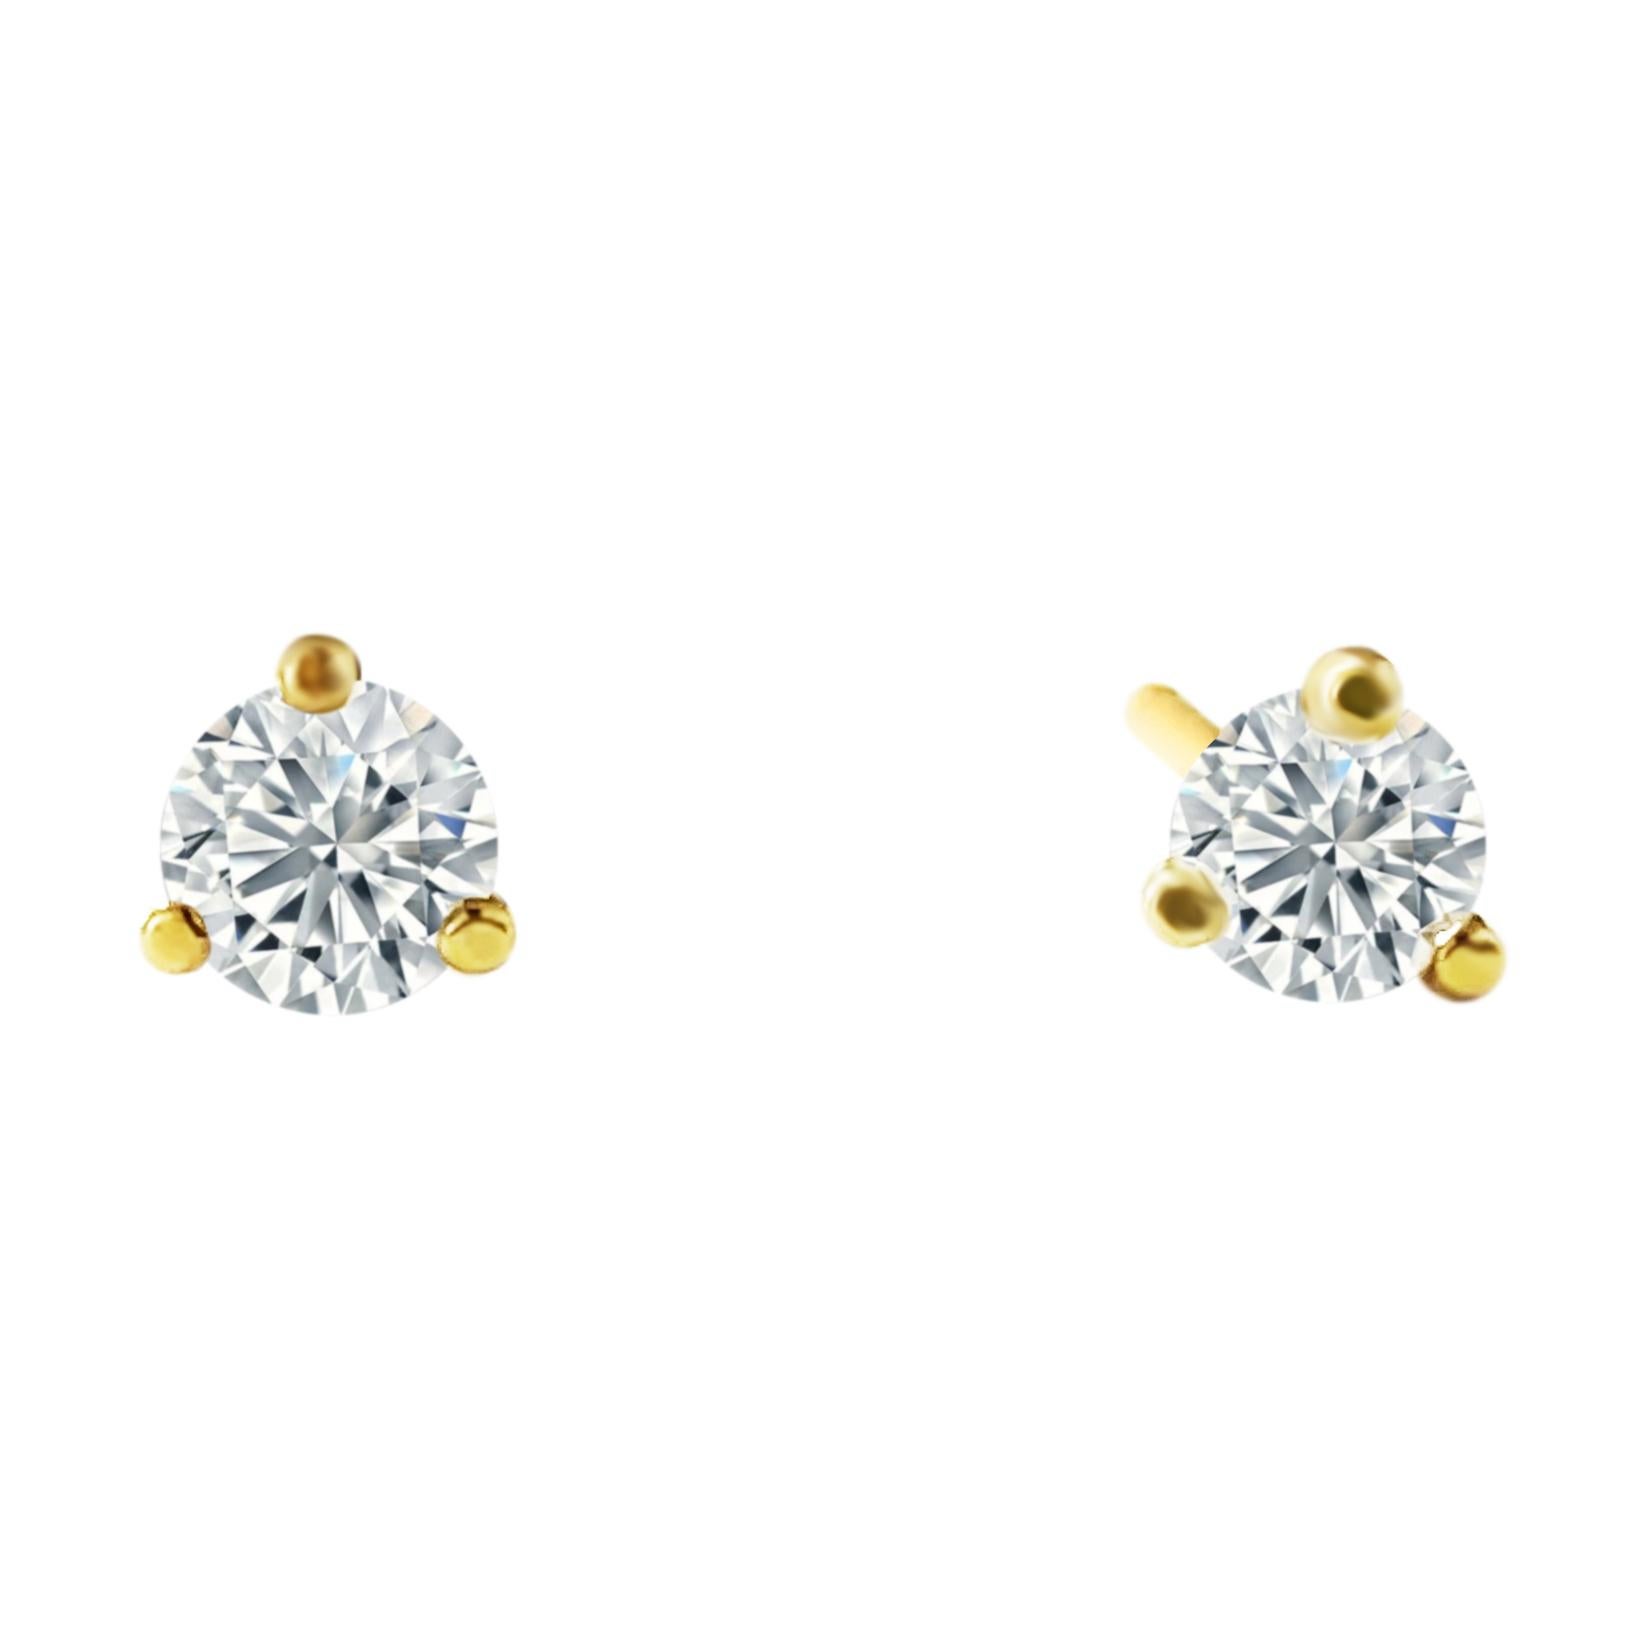 30 Carat Diamond Stud Earrings 14K Yellow Gold For Sale